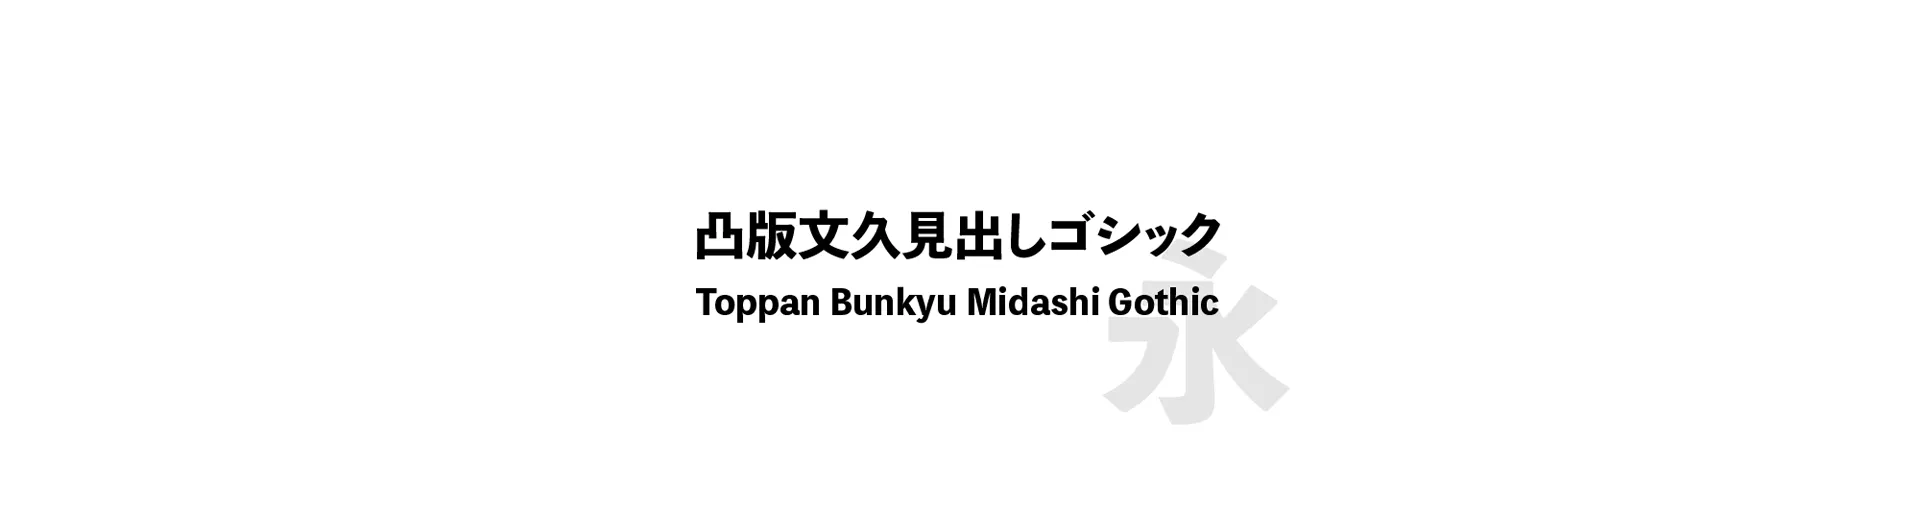 Toppan Bunkyu Midashi Gothic